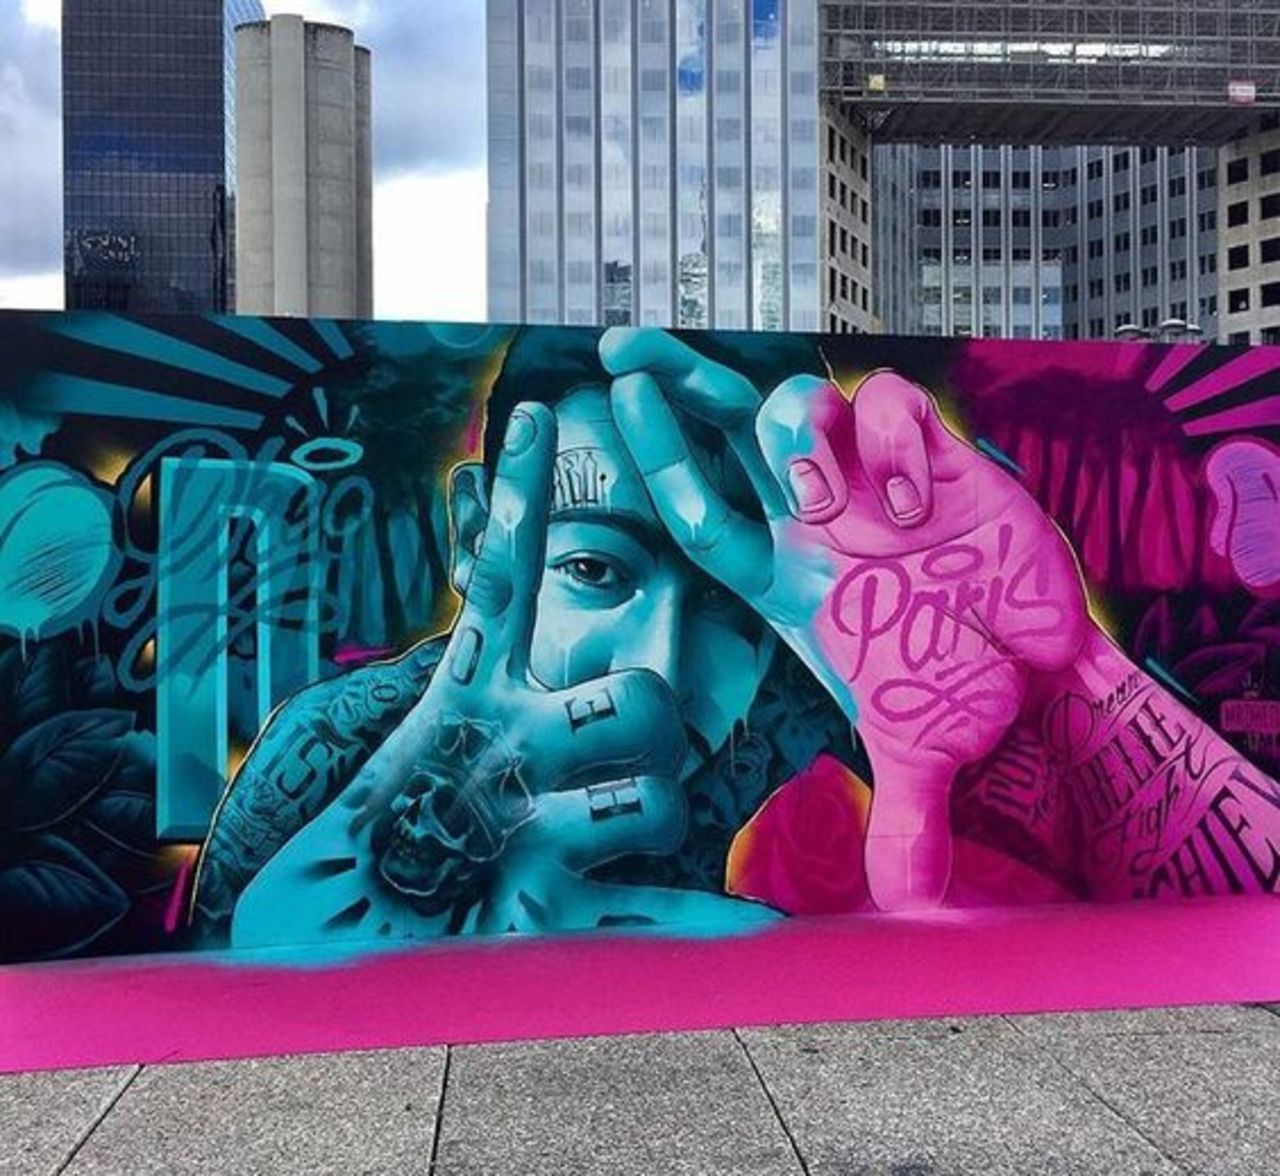 ... great work by Mr Dheo in Paris. Really great work! #StreetArt #Art #Beauty #colors #Hands #Graffiti #Mural #Paris https://t.co/oJVRFOUa75